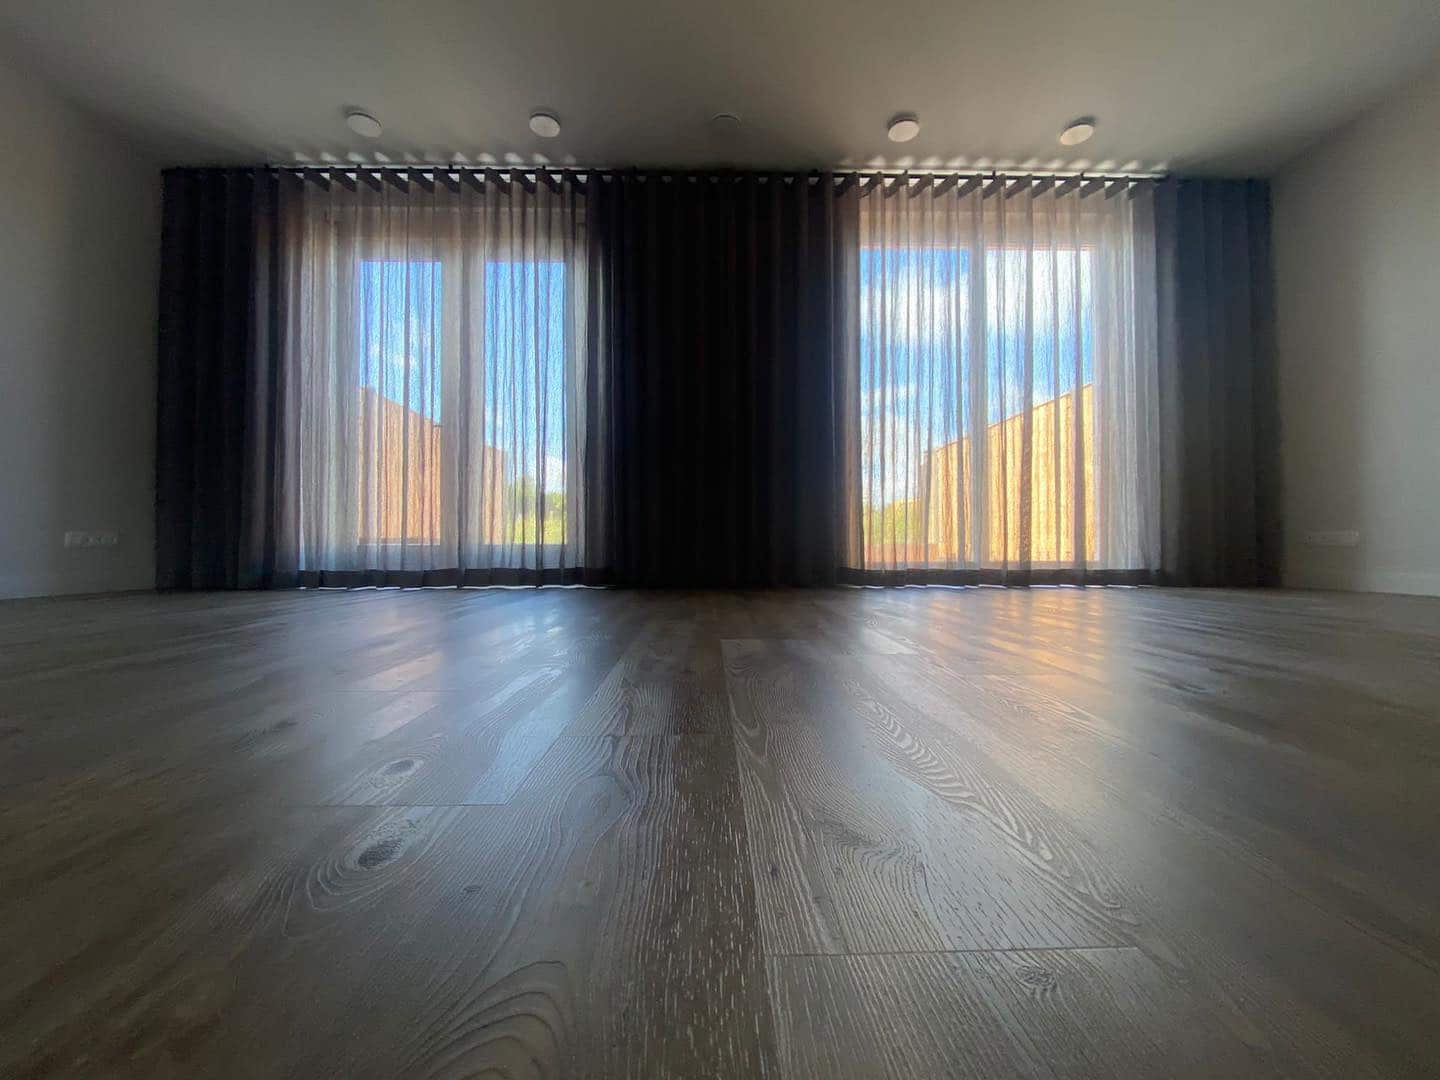 ℕ𝕚𝕖𝕦𝕨𝕓𝕠𝕦𝕨 𝕚𝕟𝕥𝕖𝕣𝕚𝕖𝕦𝕣
By interieur corner 

#curtains #floor #white #black #indoor #pvc #symmetry #new #nieuwbouw #denhaag #house #intereur #corner #interiordesign #advies